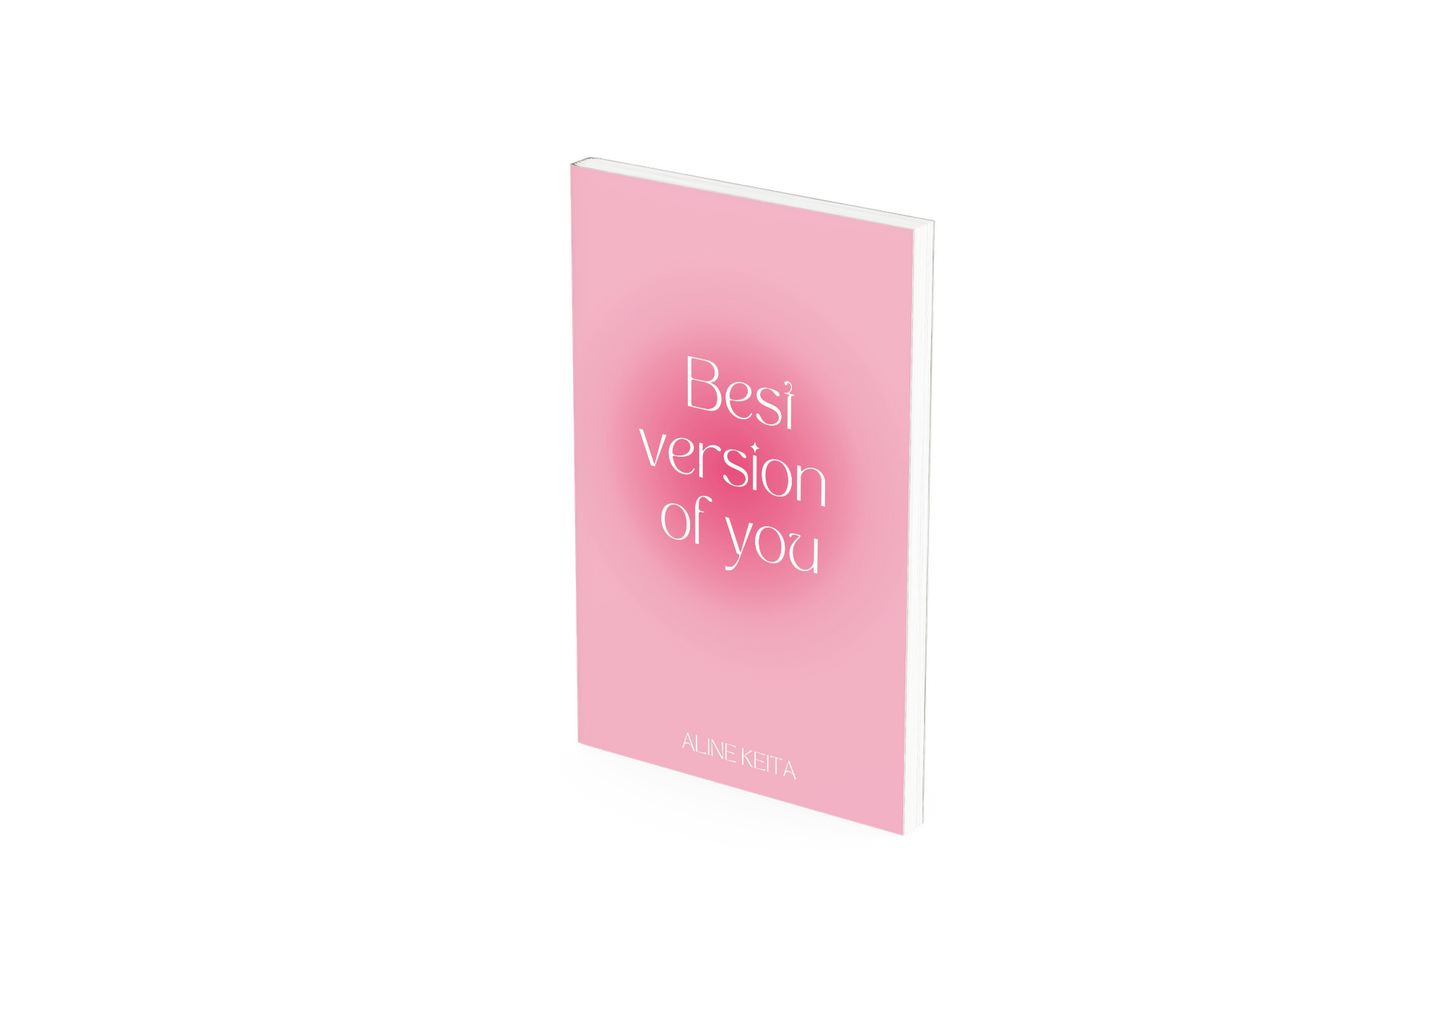 Livre "best version of you"